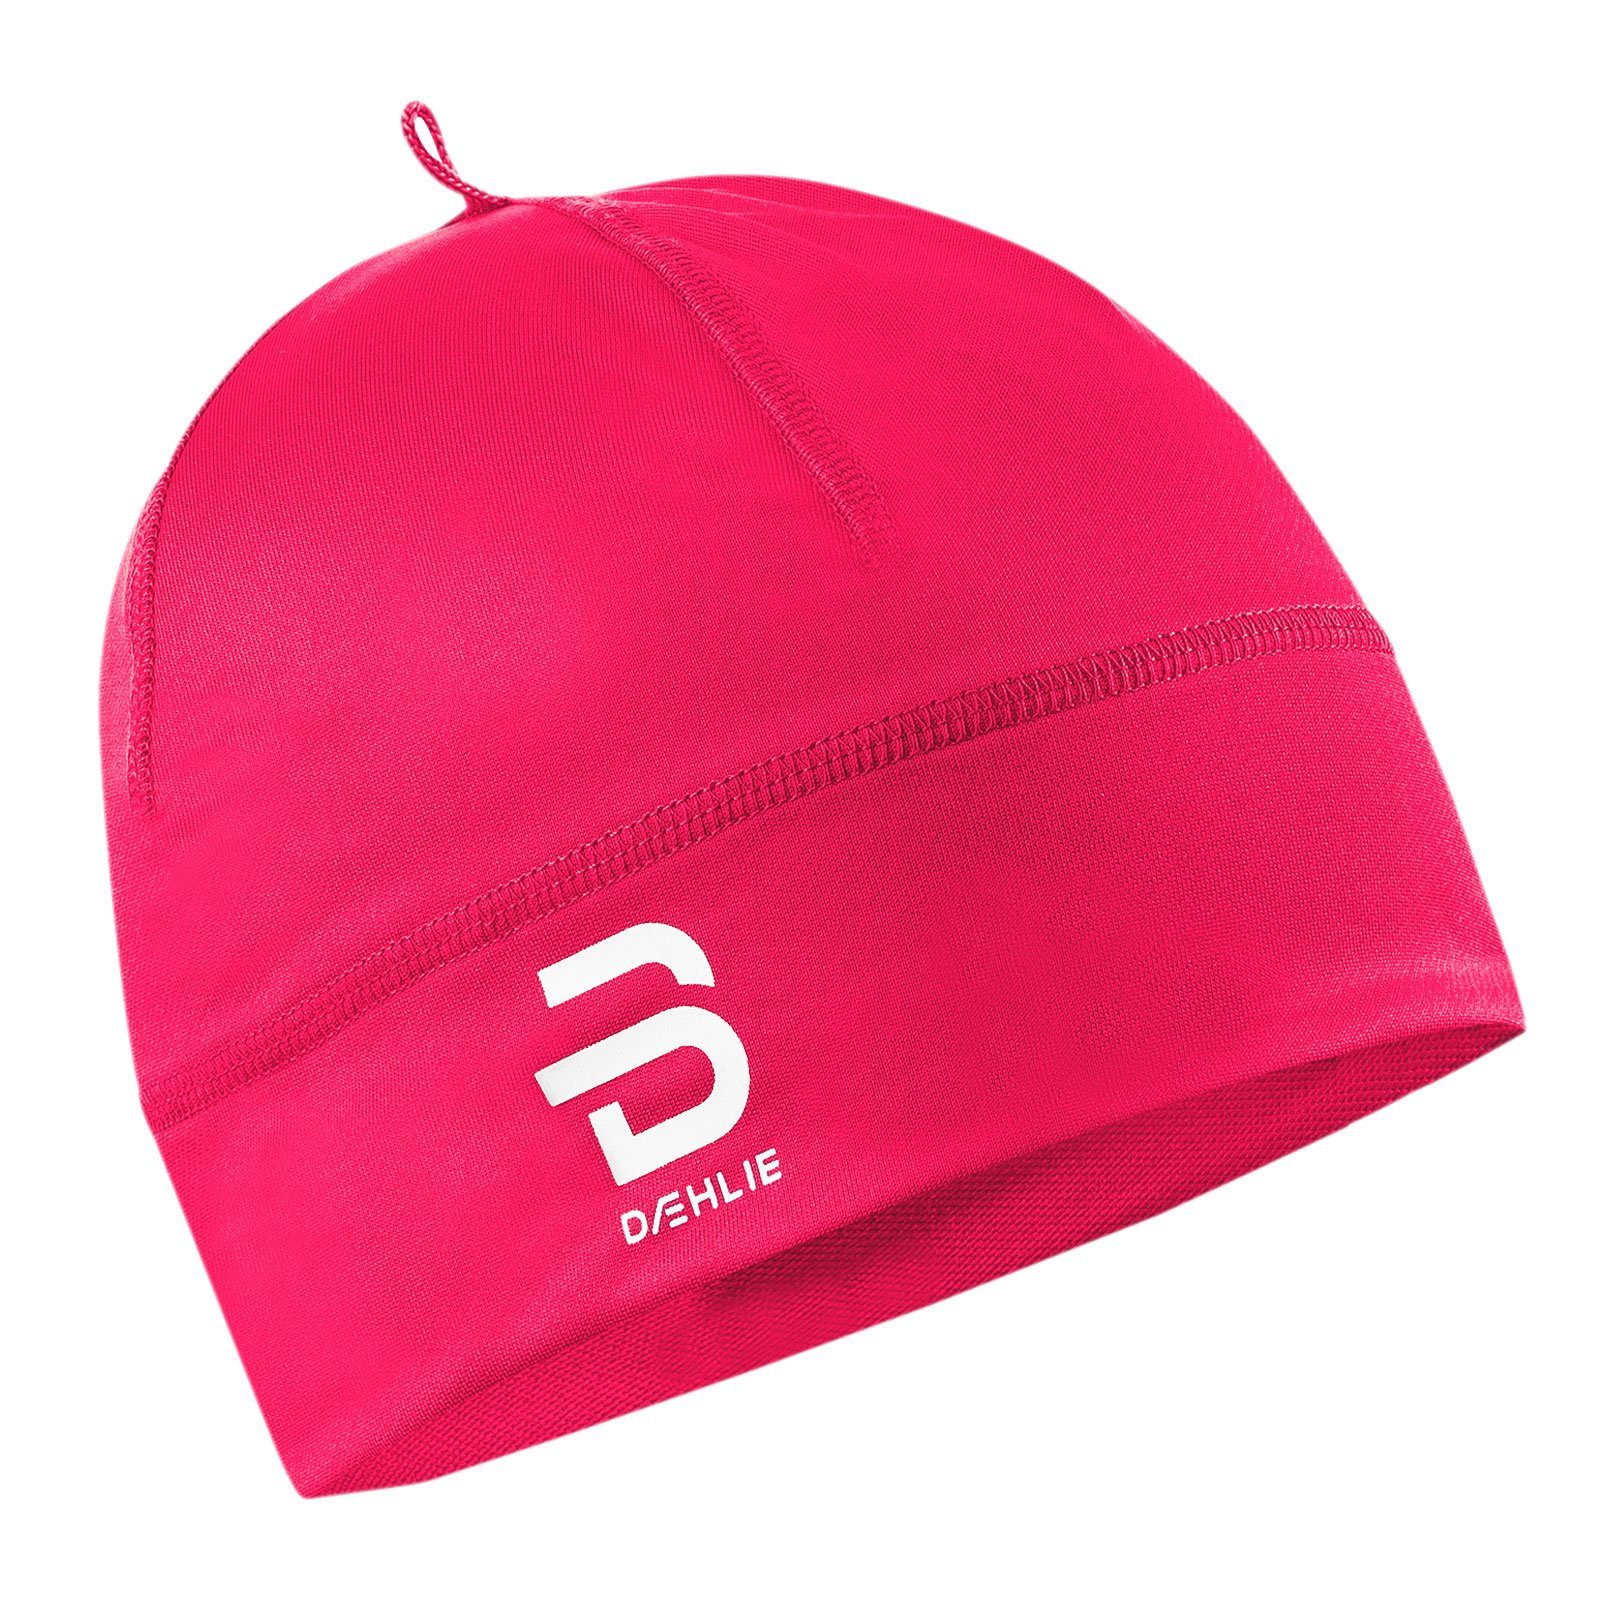 mit DAEHLIE Logo Skimütze dekorativem Polyknit rosa Hat